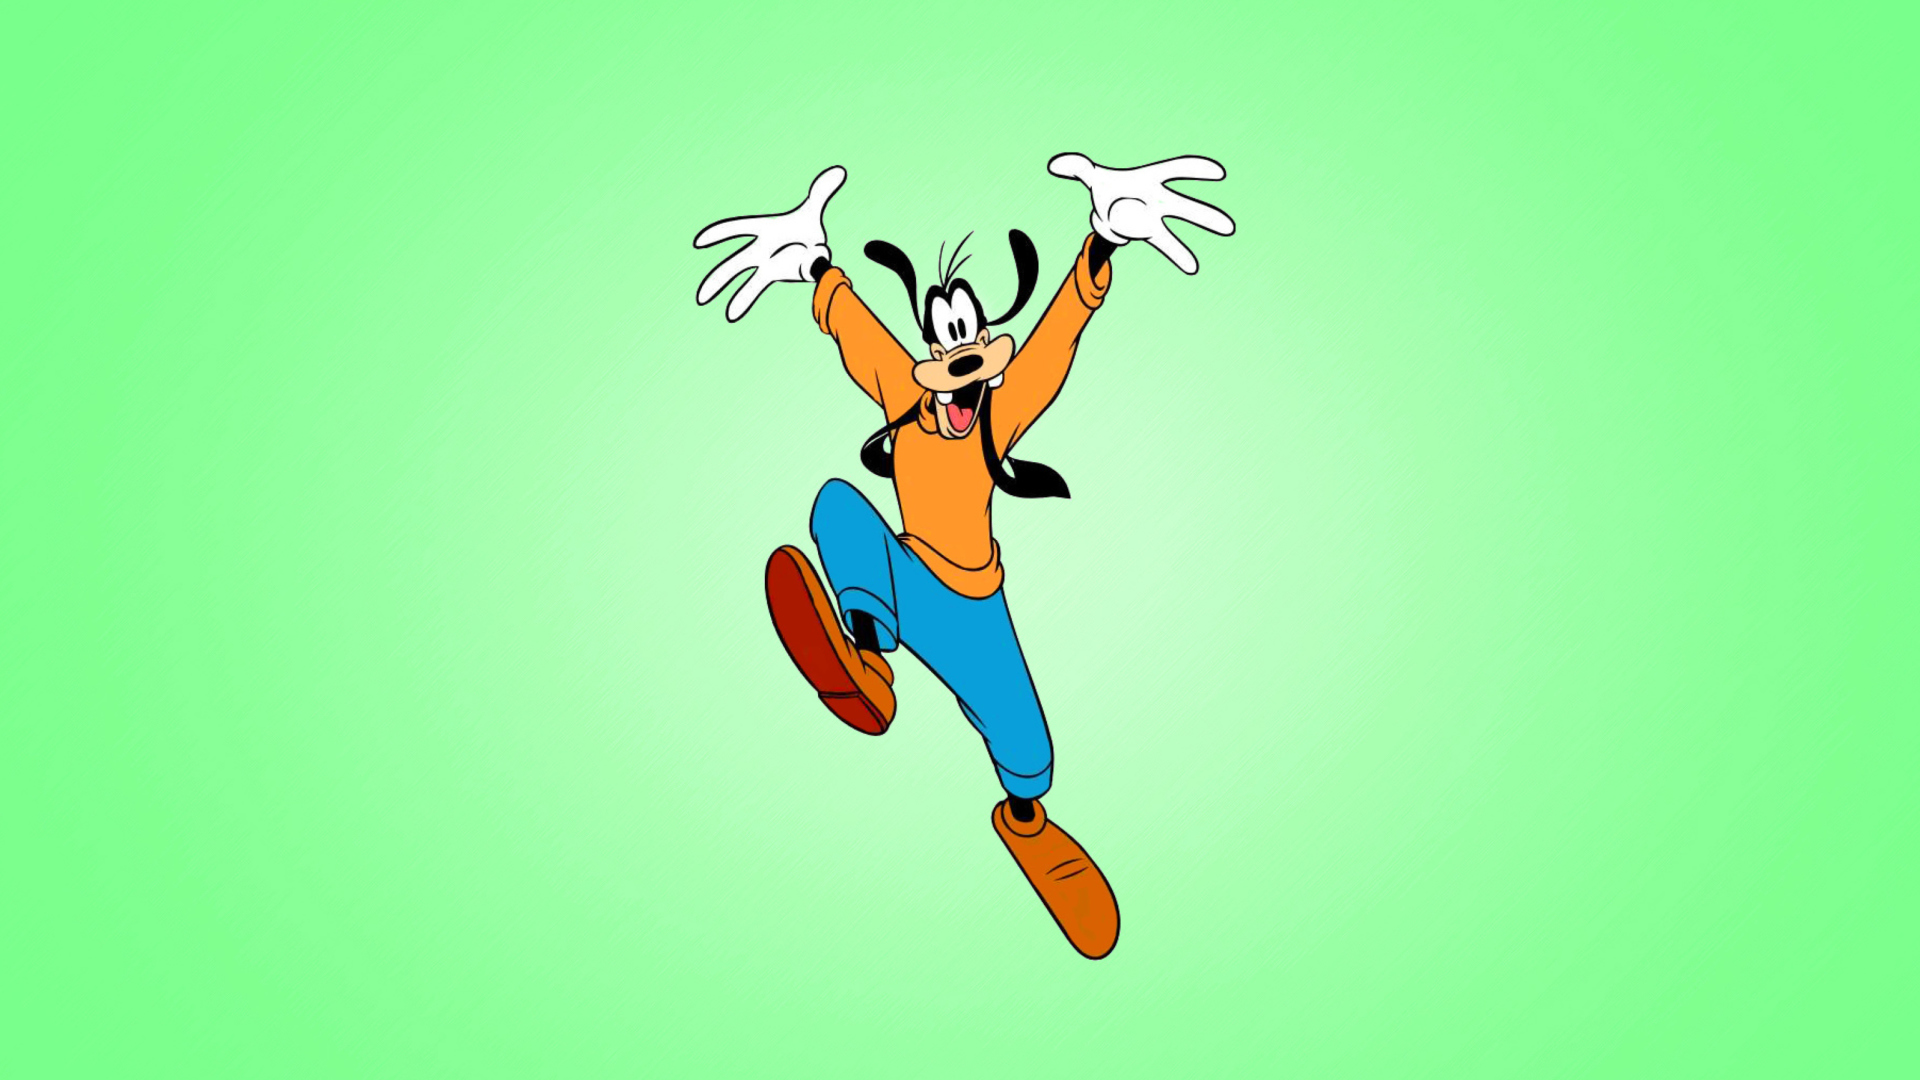 Goof By Walt Disney wallpaper 1920x1080